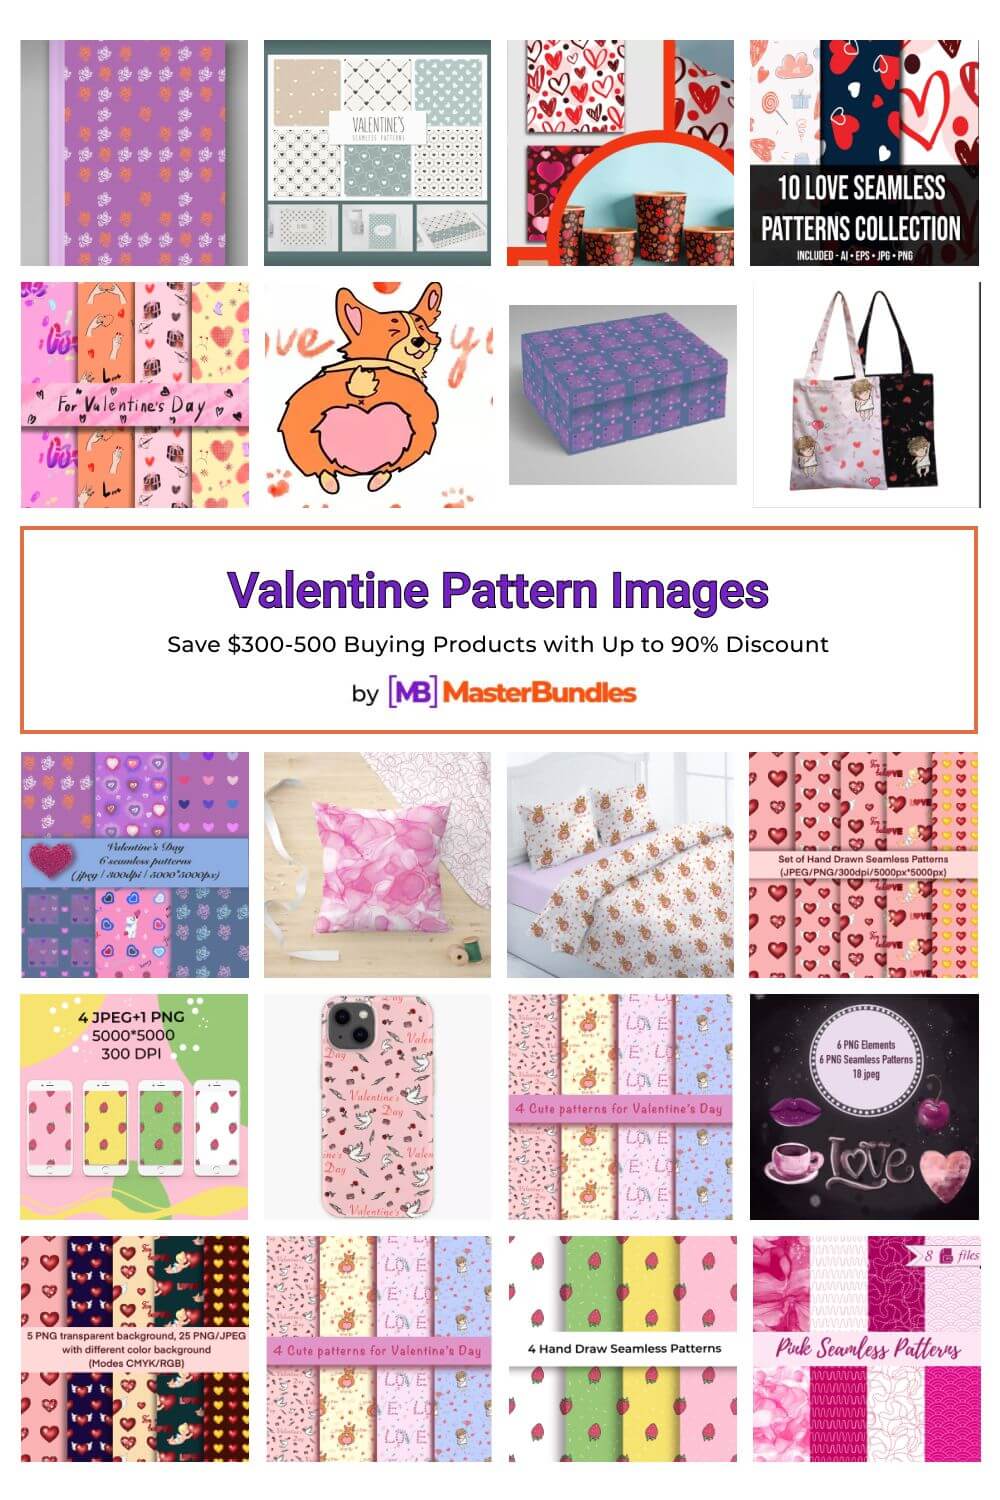 Valentine Pattern Images pinterest image.